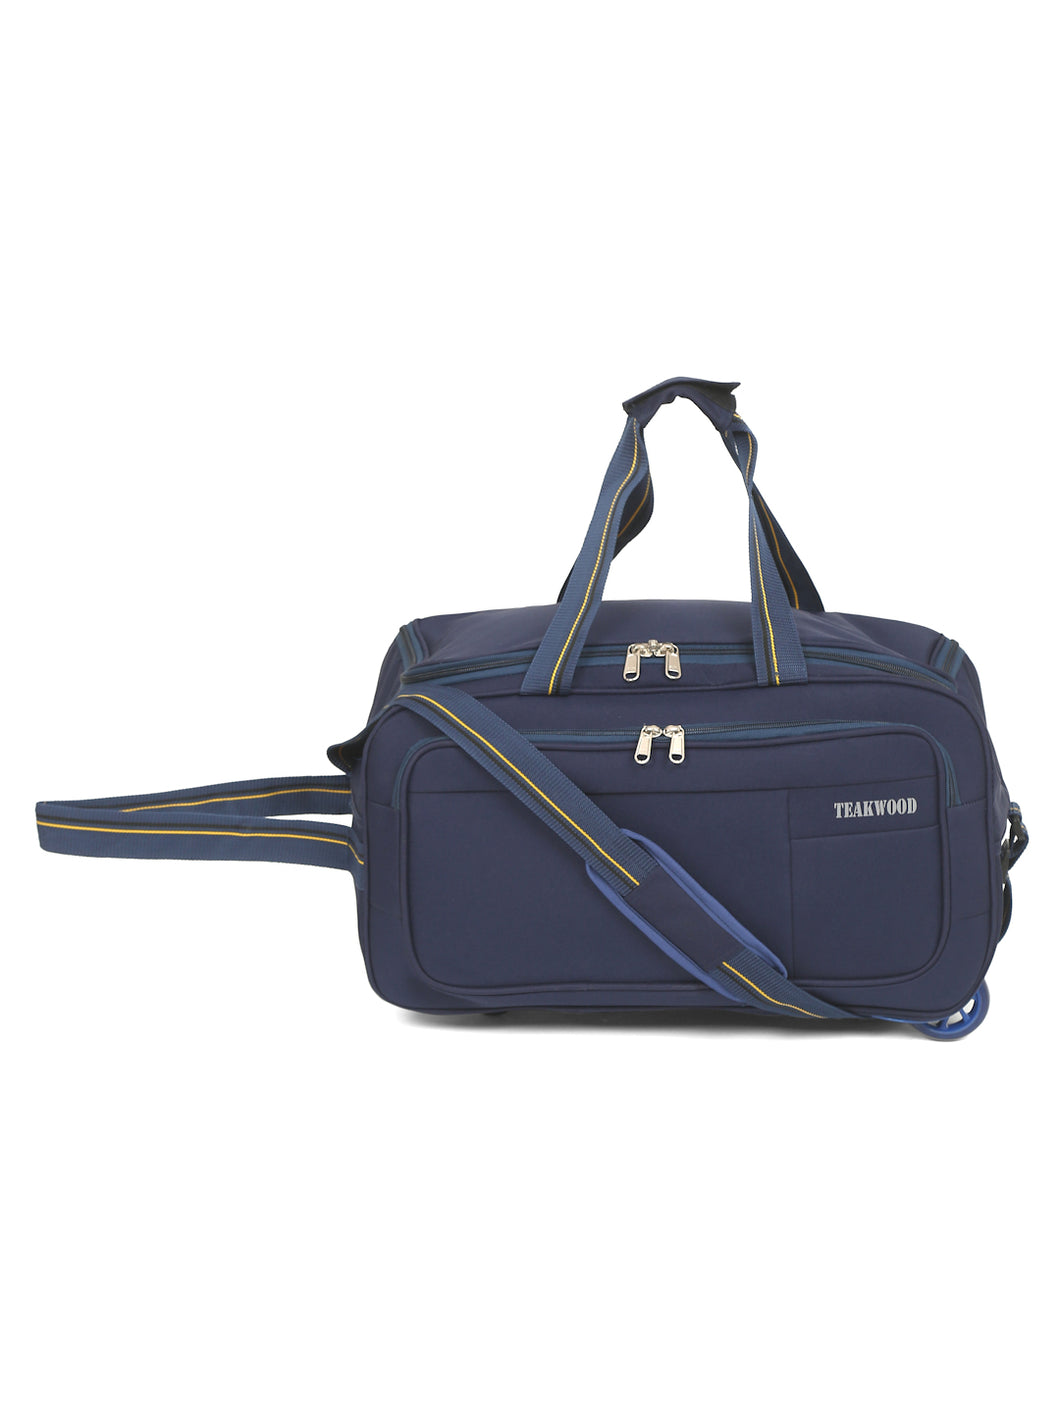 Teakwood Rolling Medium Duffel Bag (Blue)